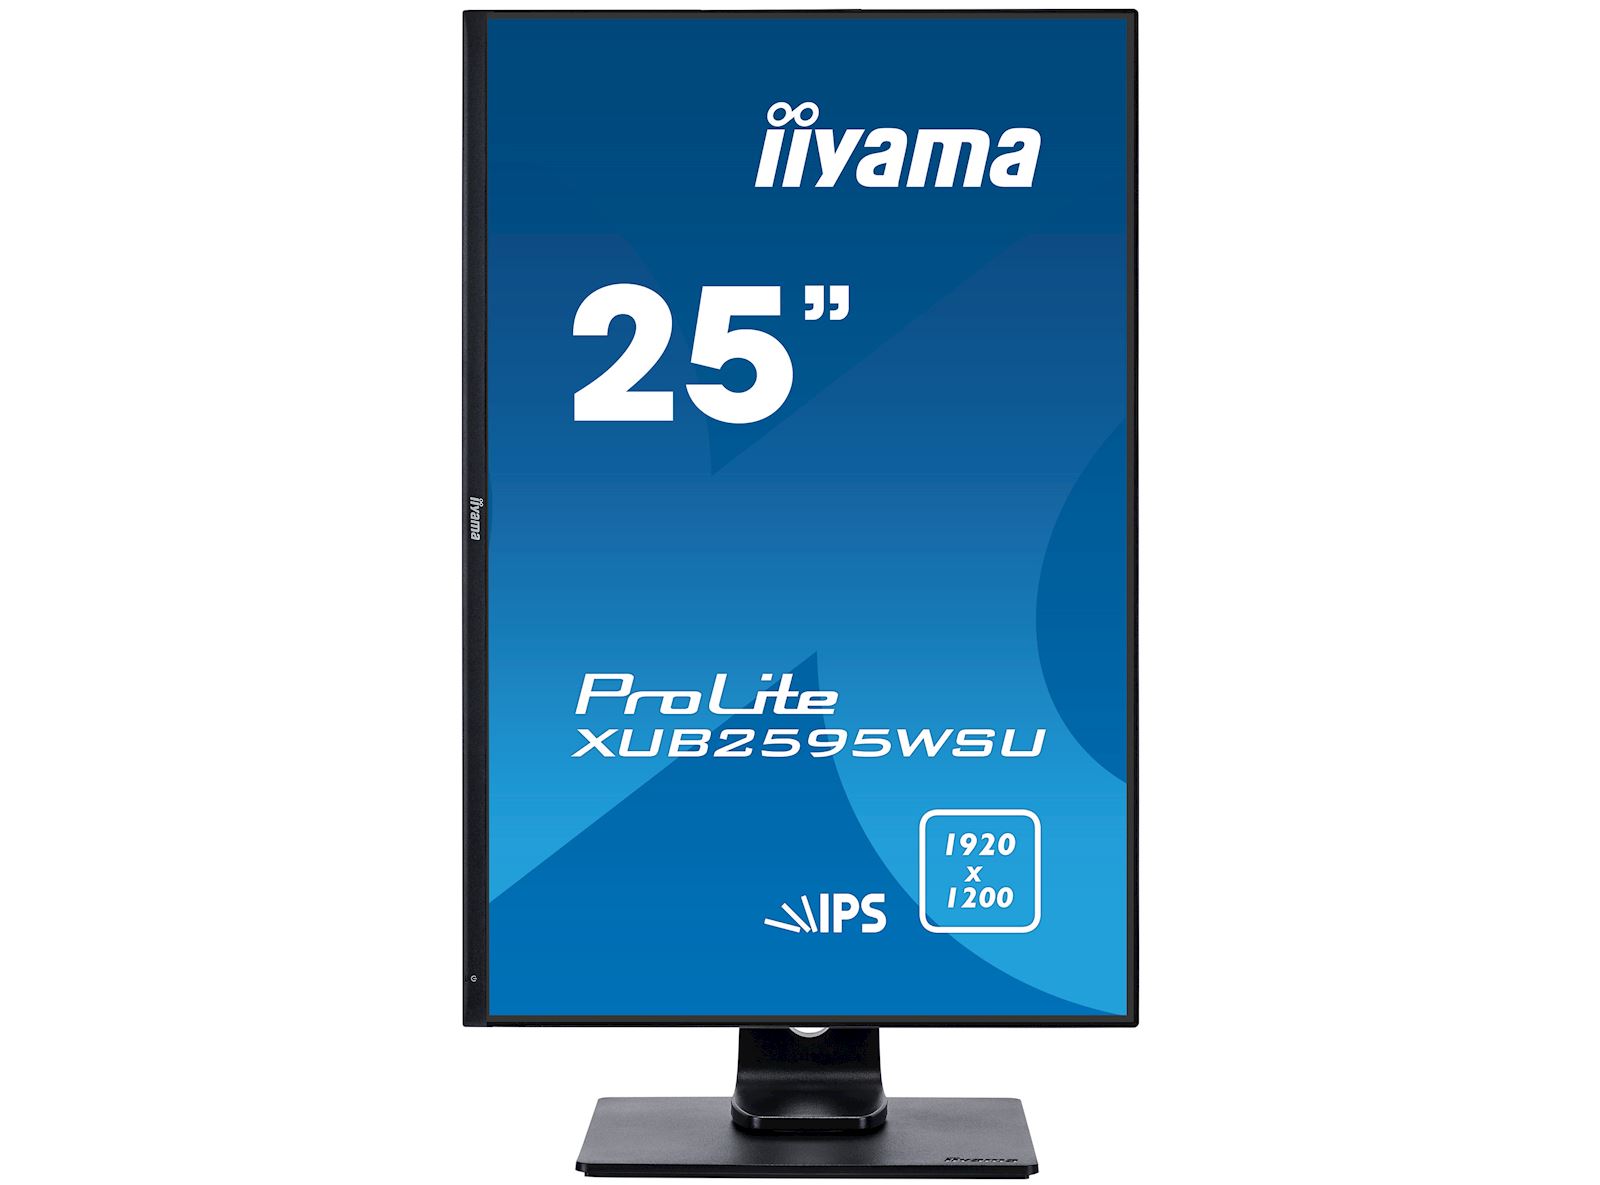 iiyama ProLite XU2595WSU-B1 25" Monitor 16:10 Aspect Ratio